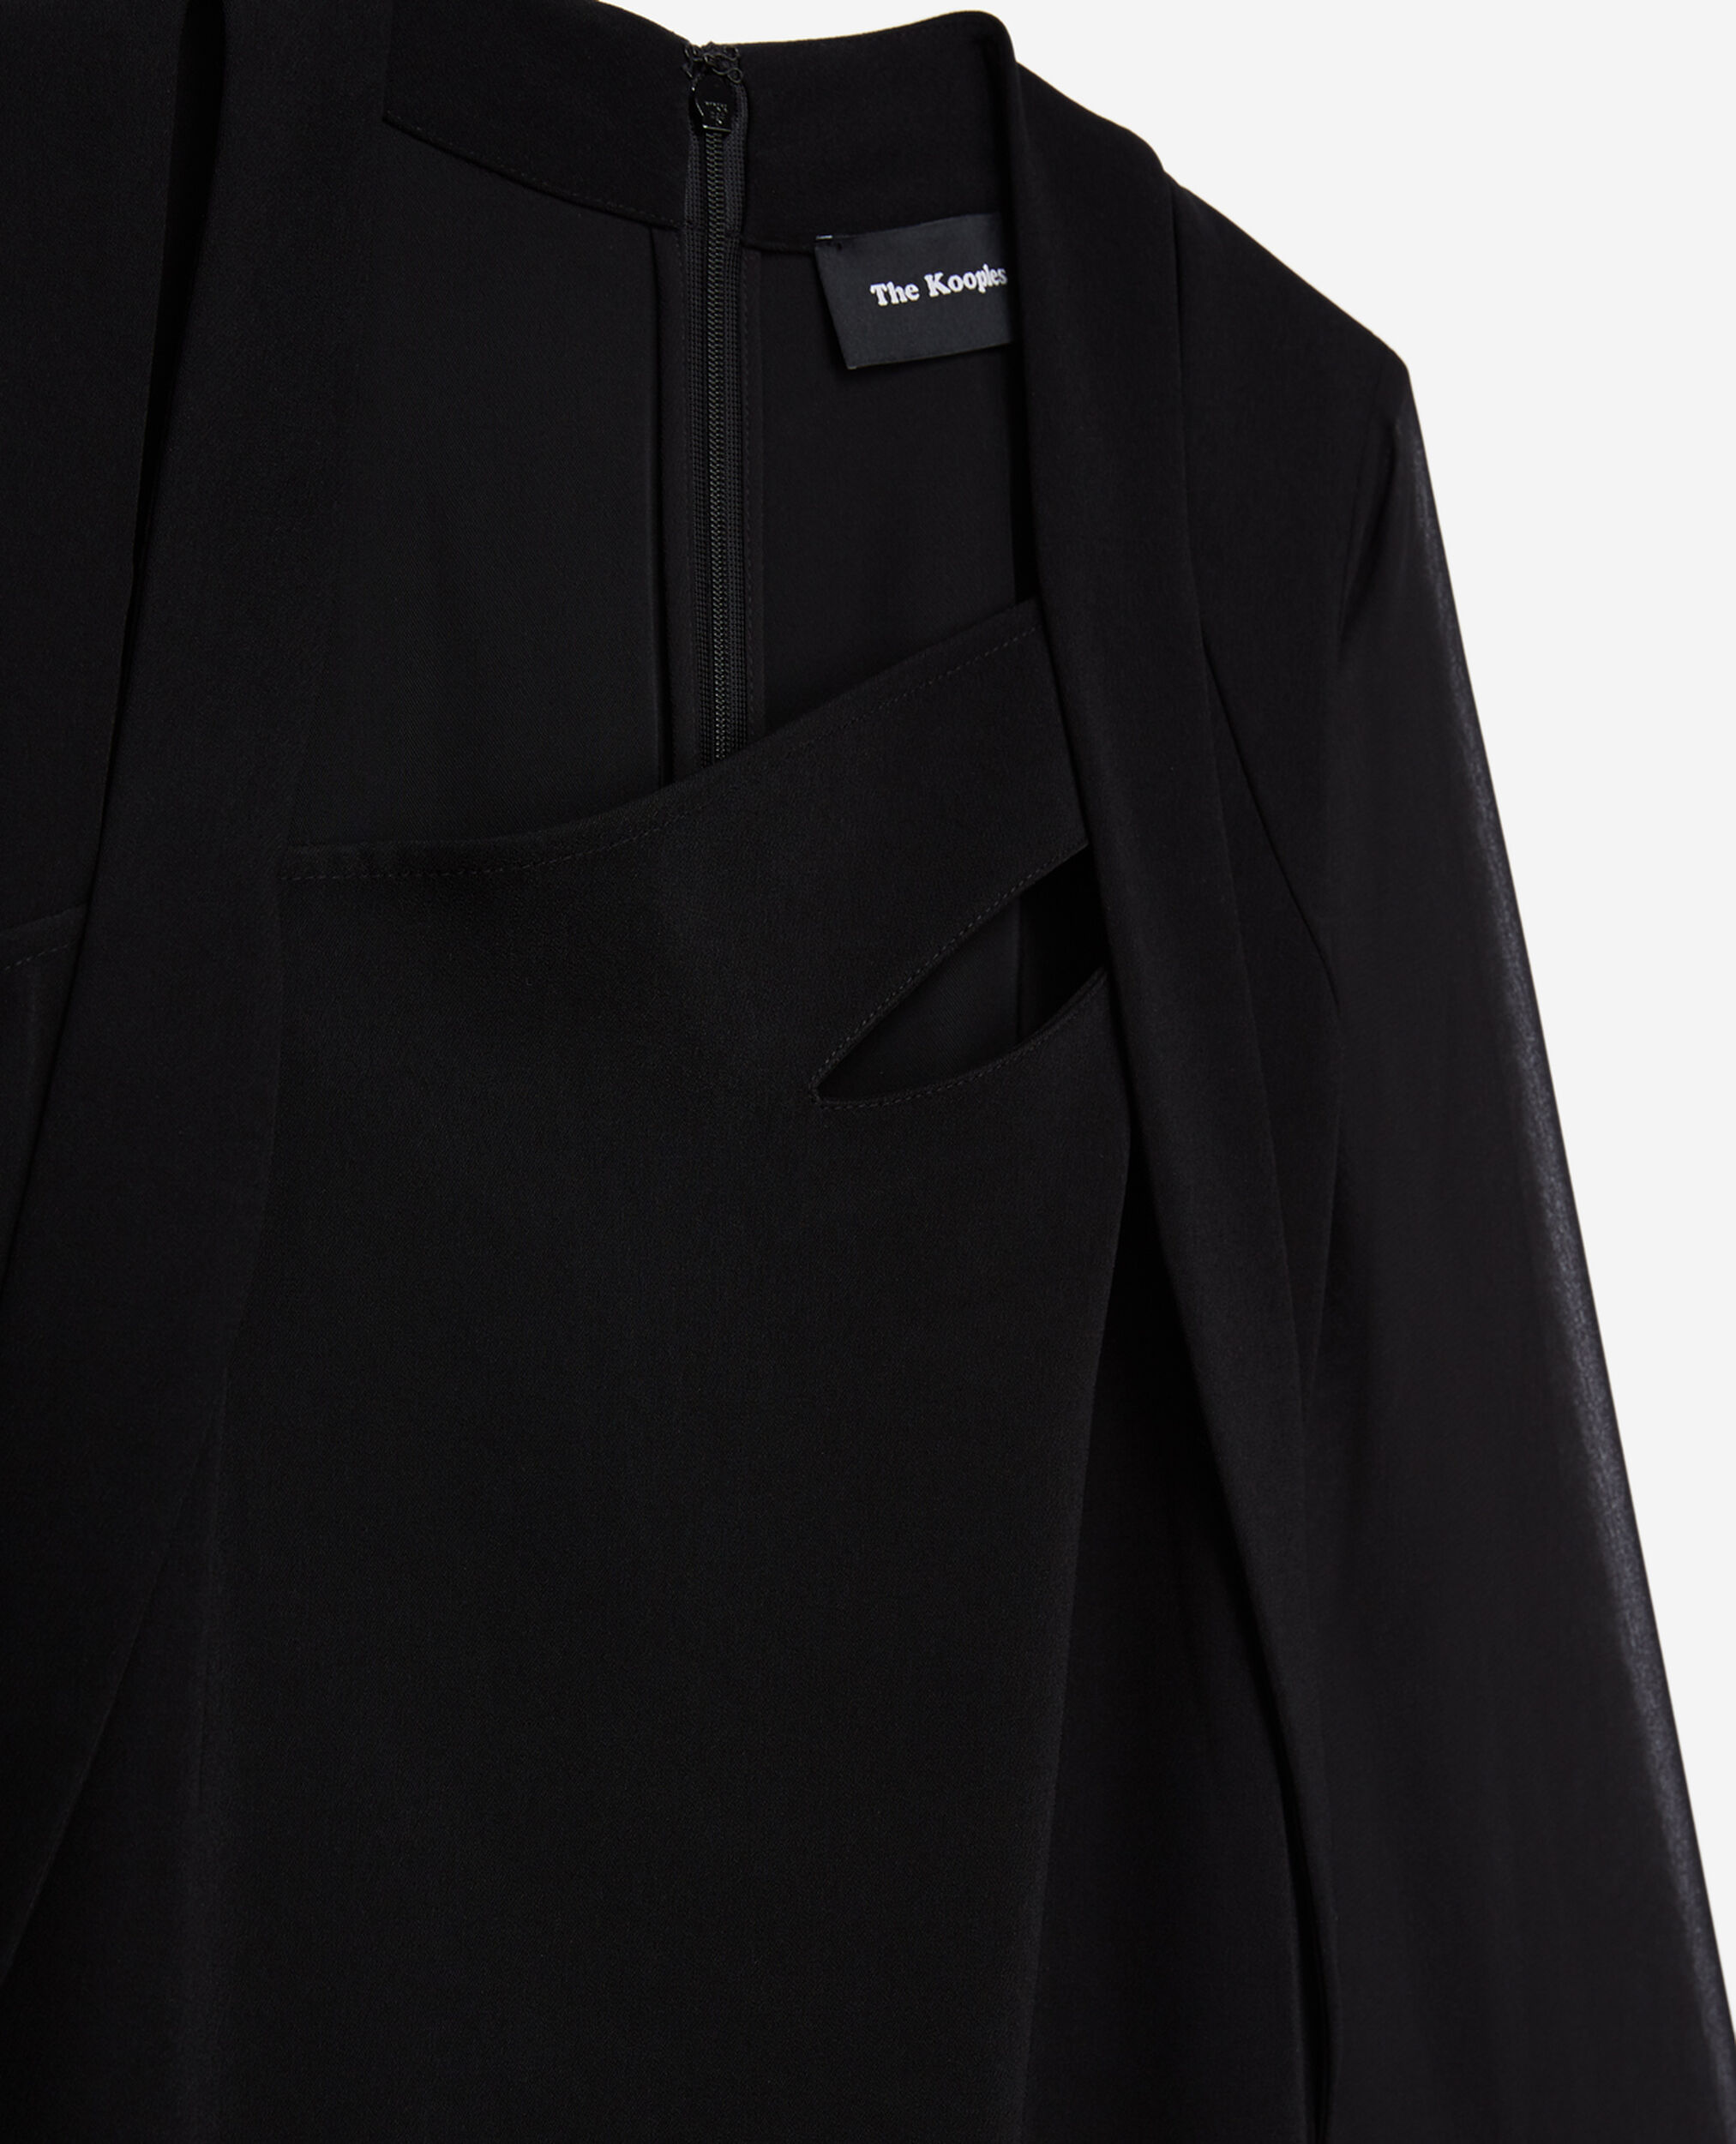 Langärmeliges schwarzes Kleid mit Schlitz, BLACK, hi-res image number null